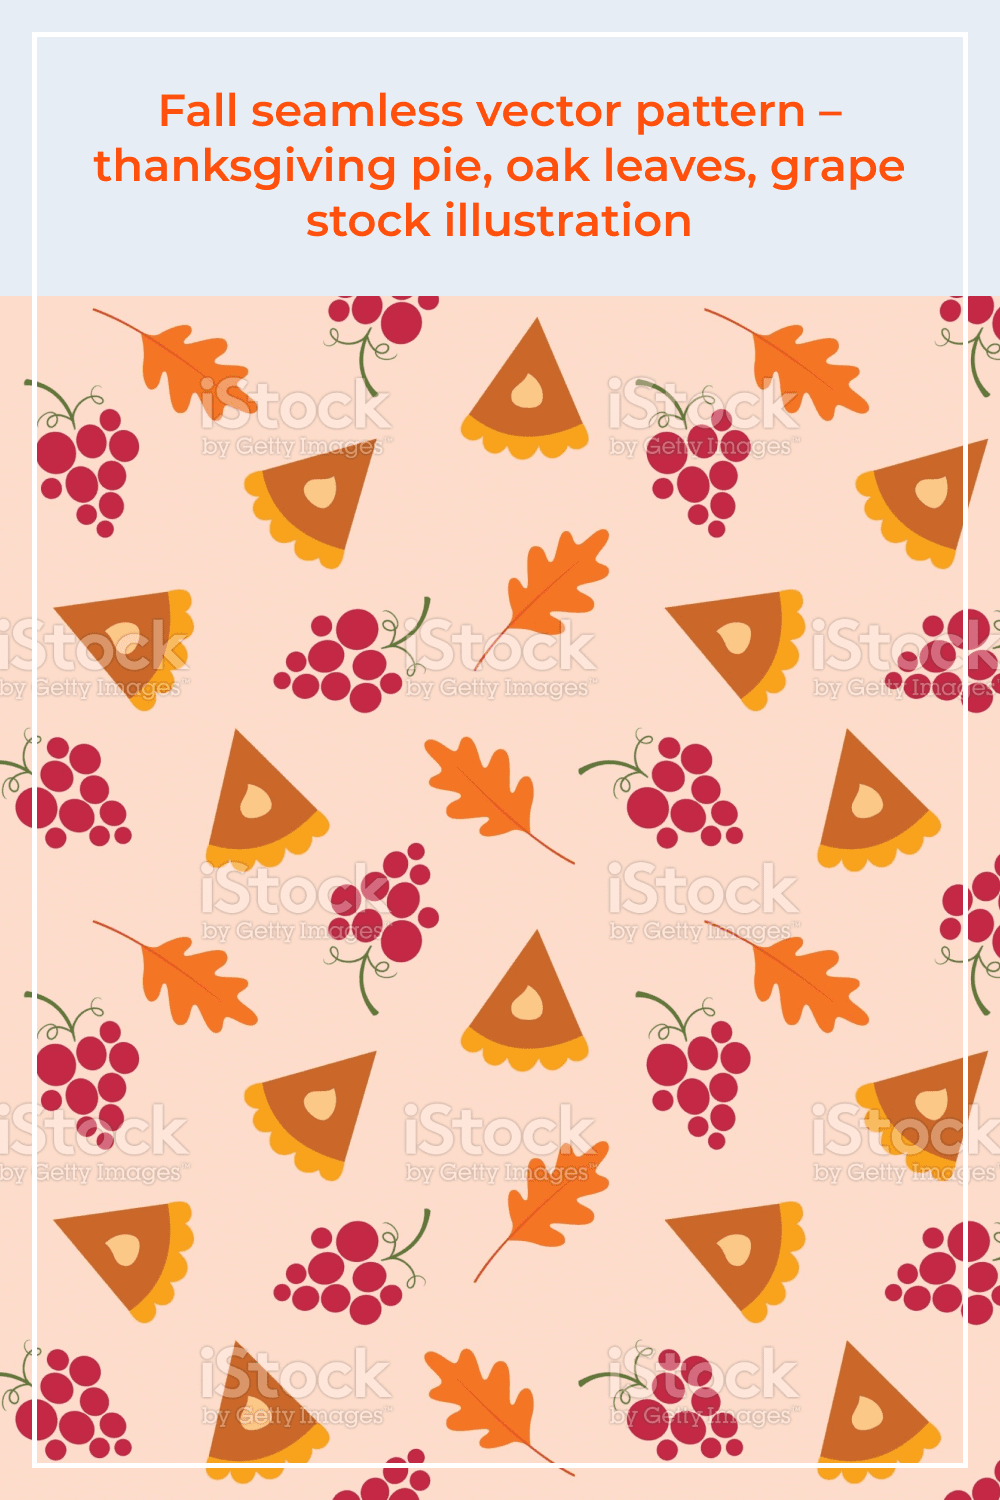 Fall seamless vector pattern - thanksgiving pie, oak leaves, grape stock illustration.